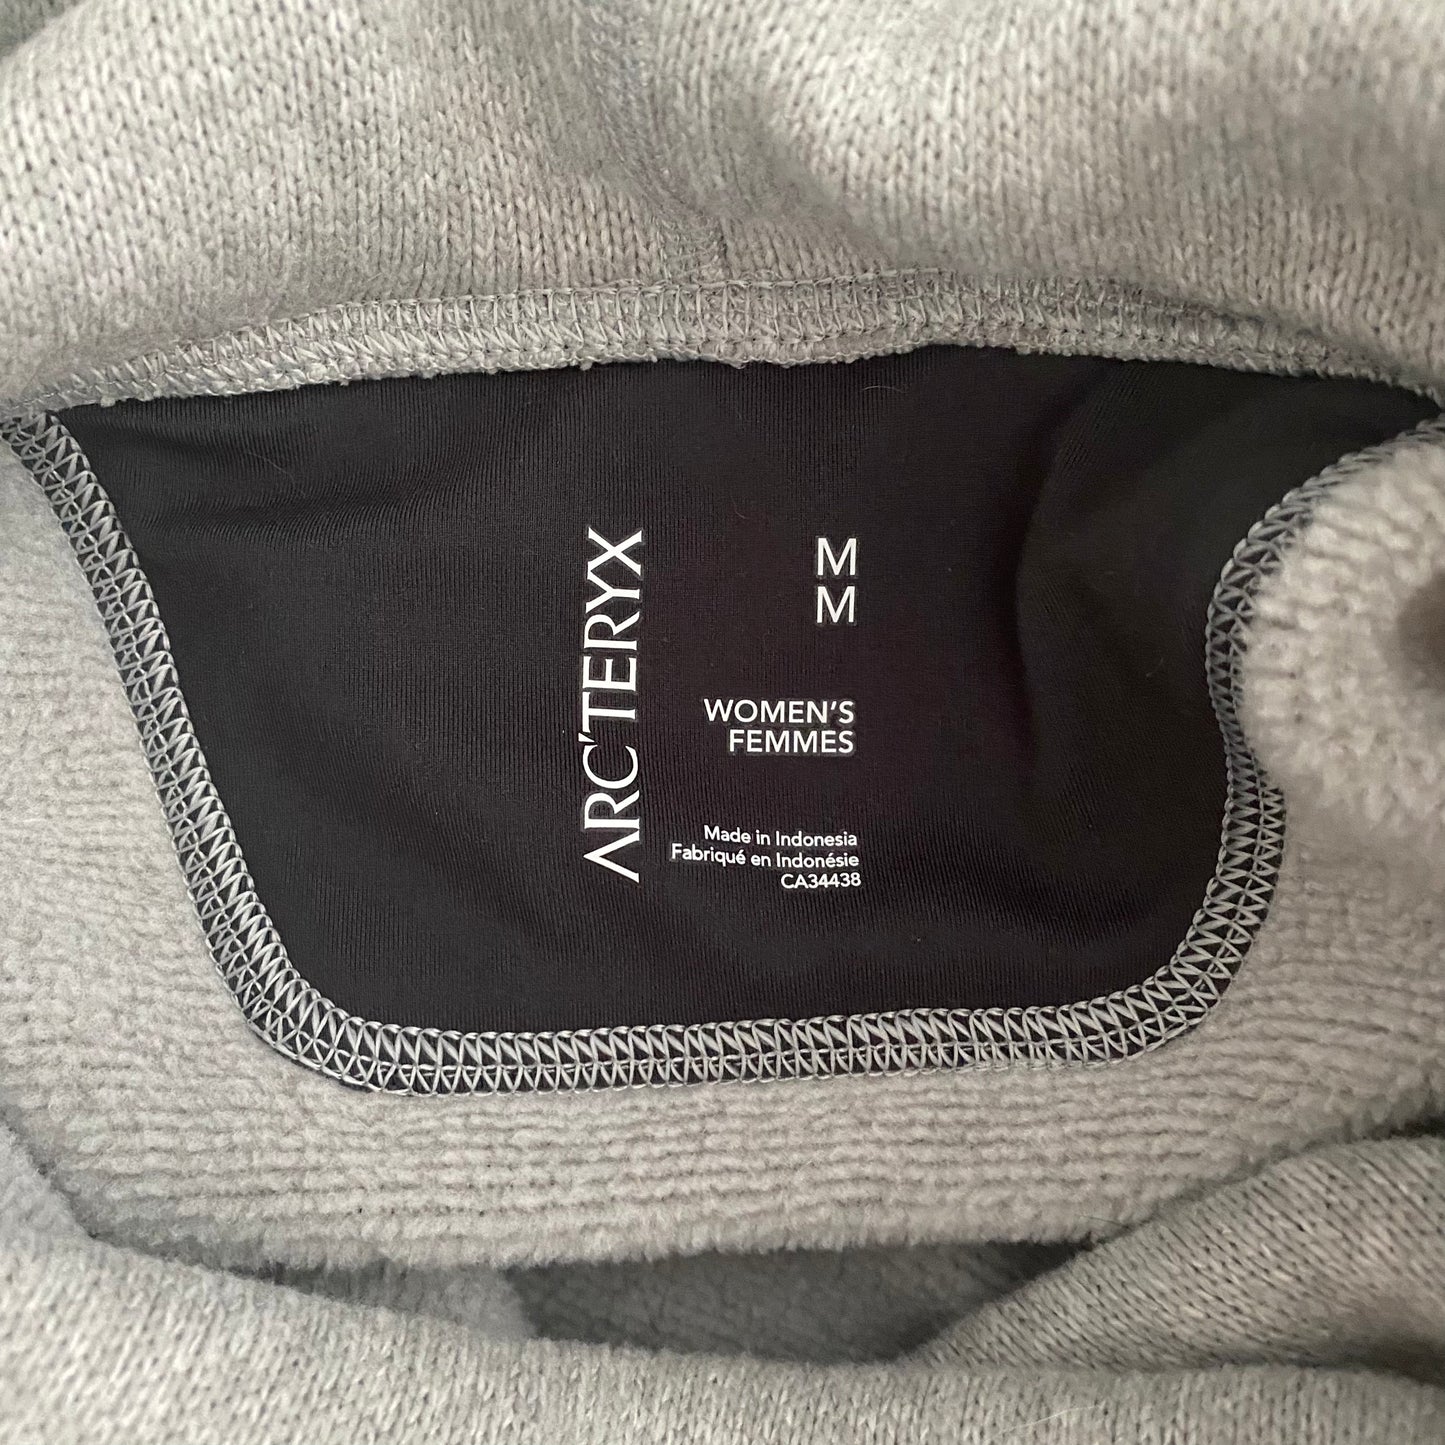 Arc’teryx Desira Cowl Funnel Turtleneck Sweater Tunic Size Medium